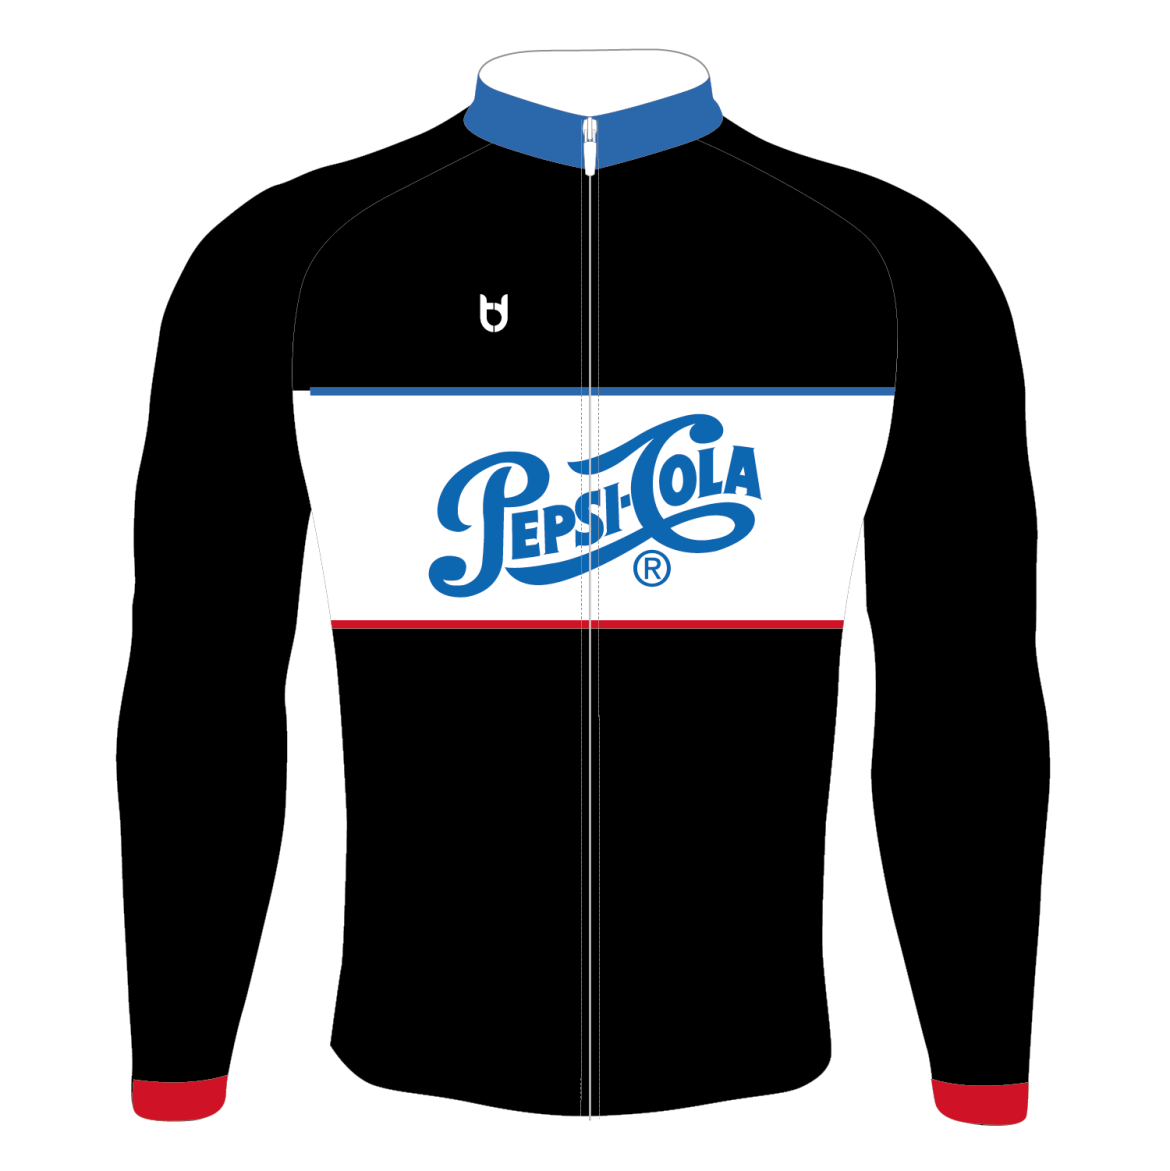 Pepsico jacket cycling